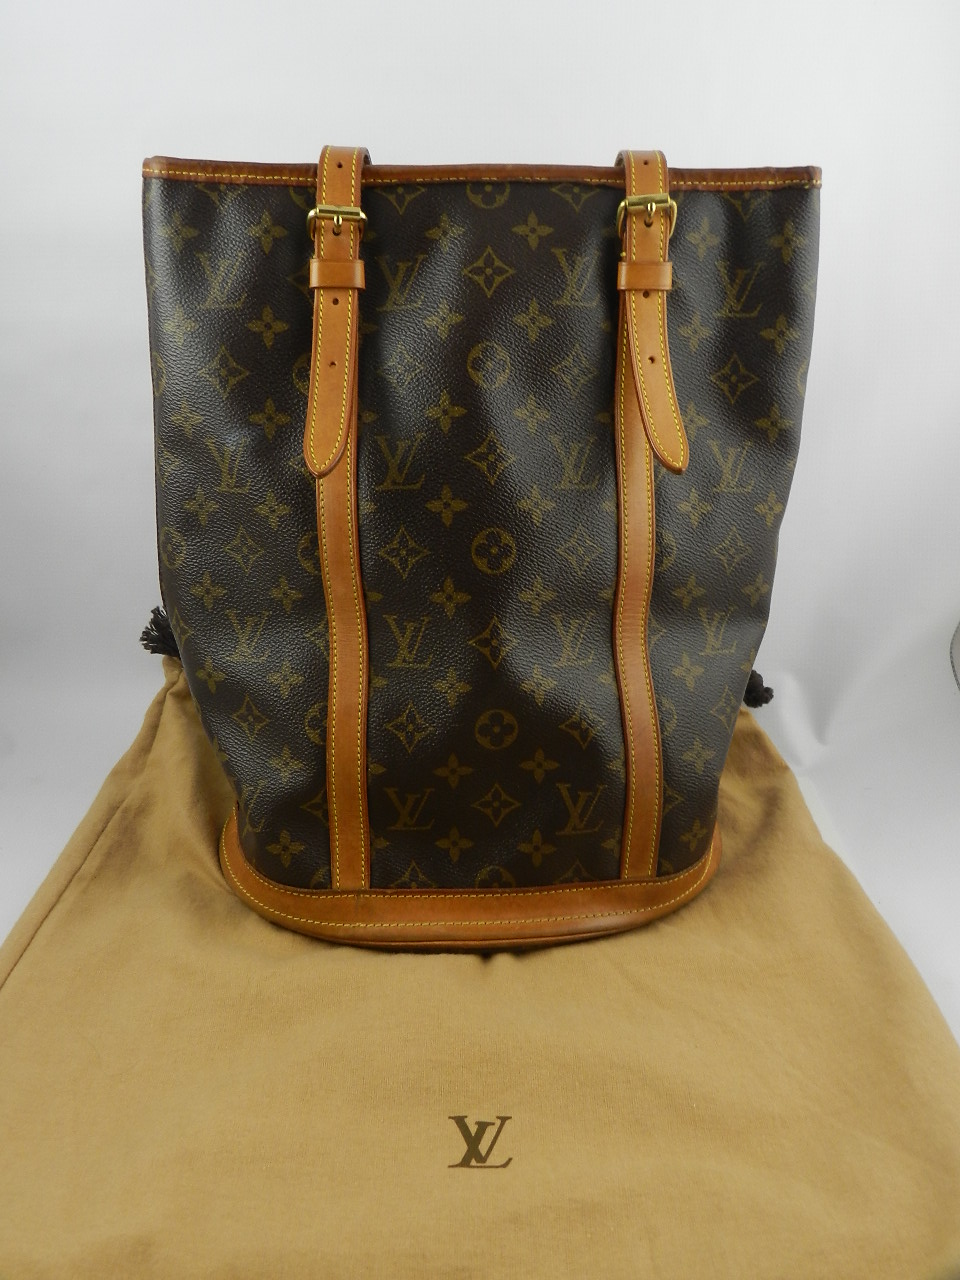 Louis Vuitton, Paris. A brown leather monogram bucket bag with tan leather shoulder straps,